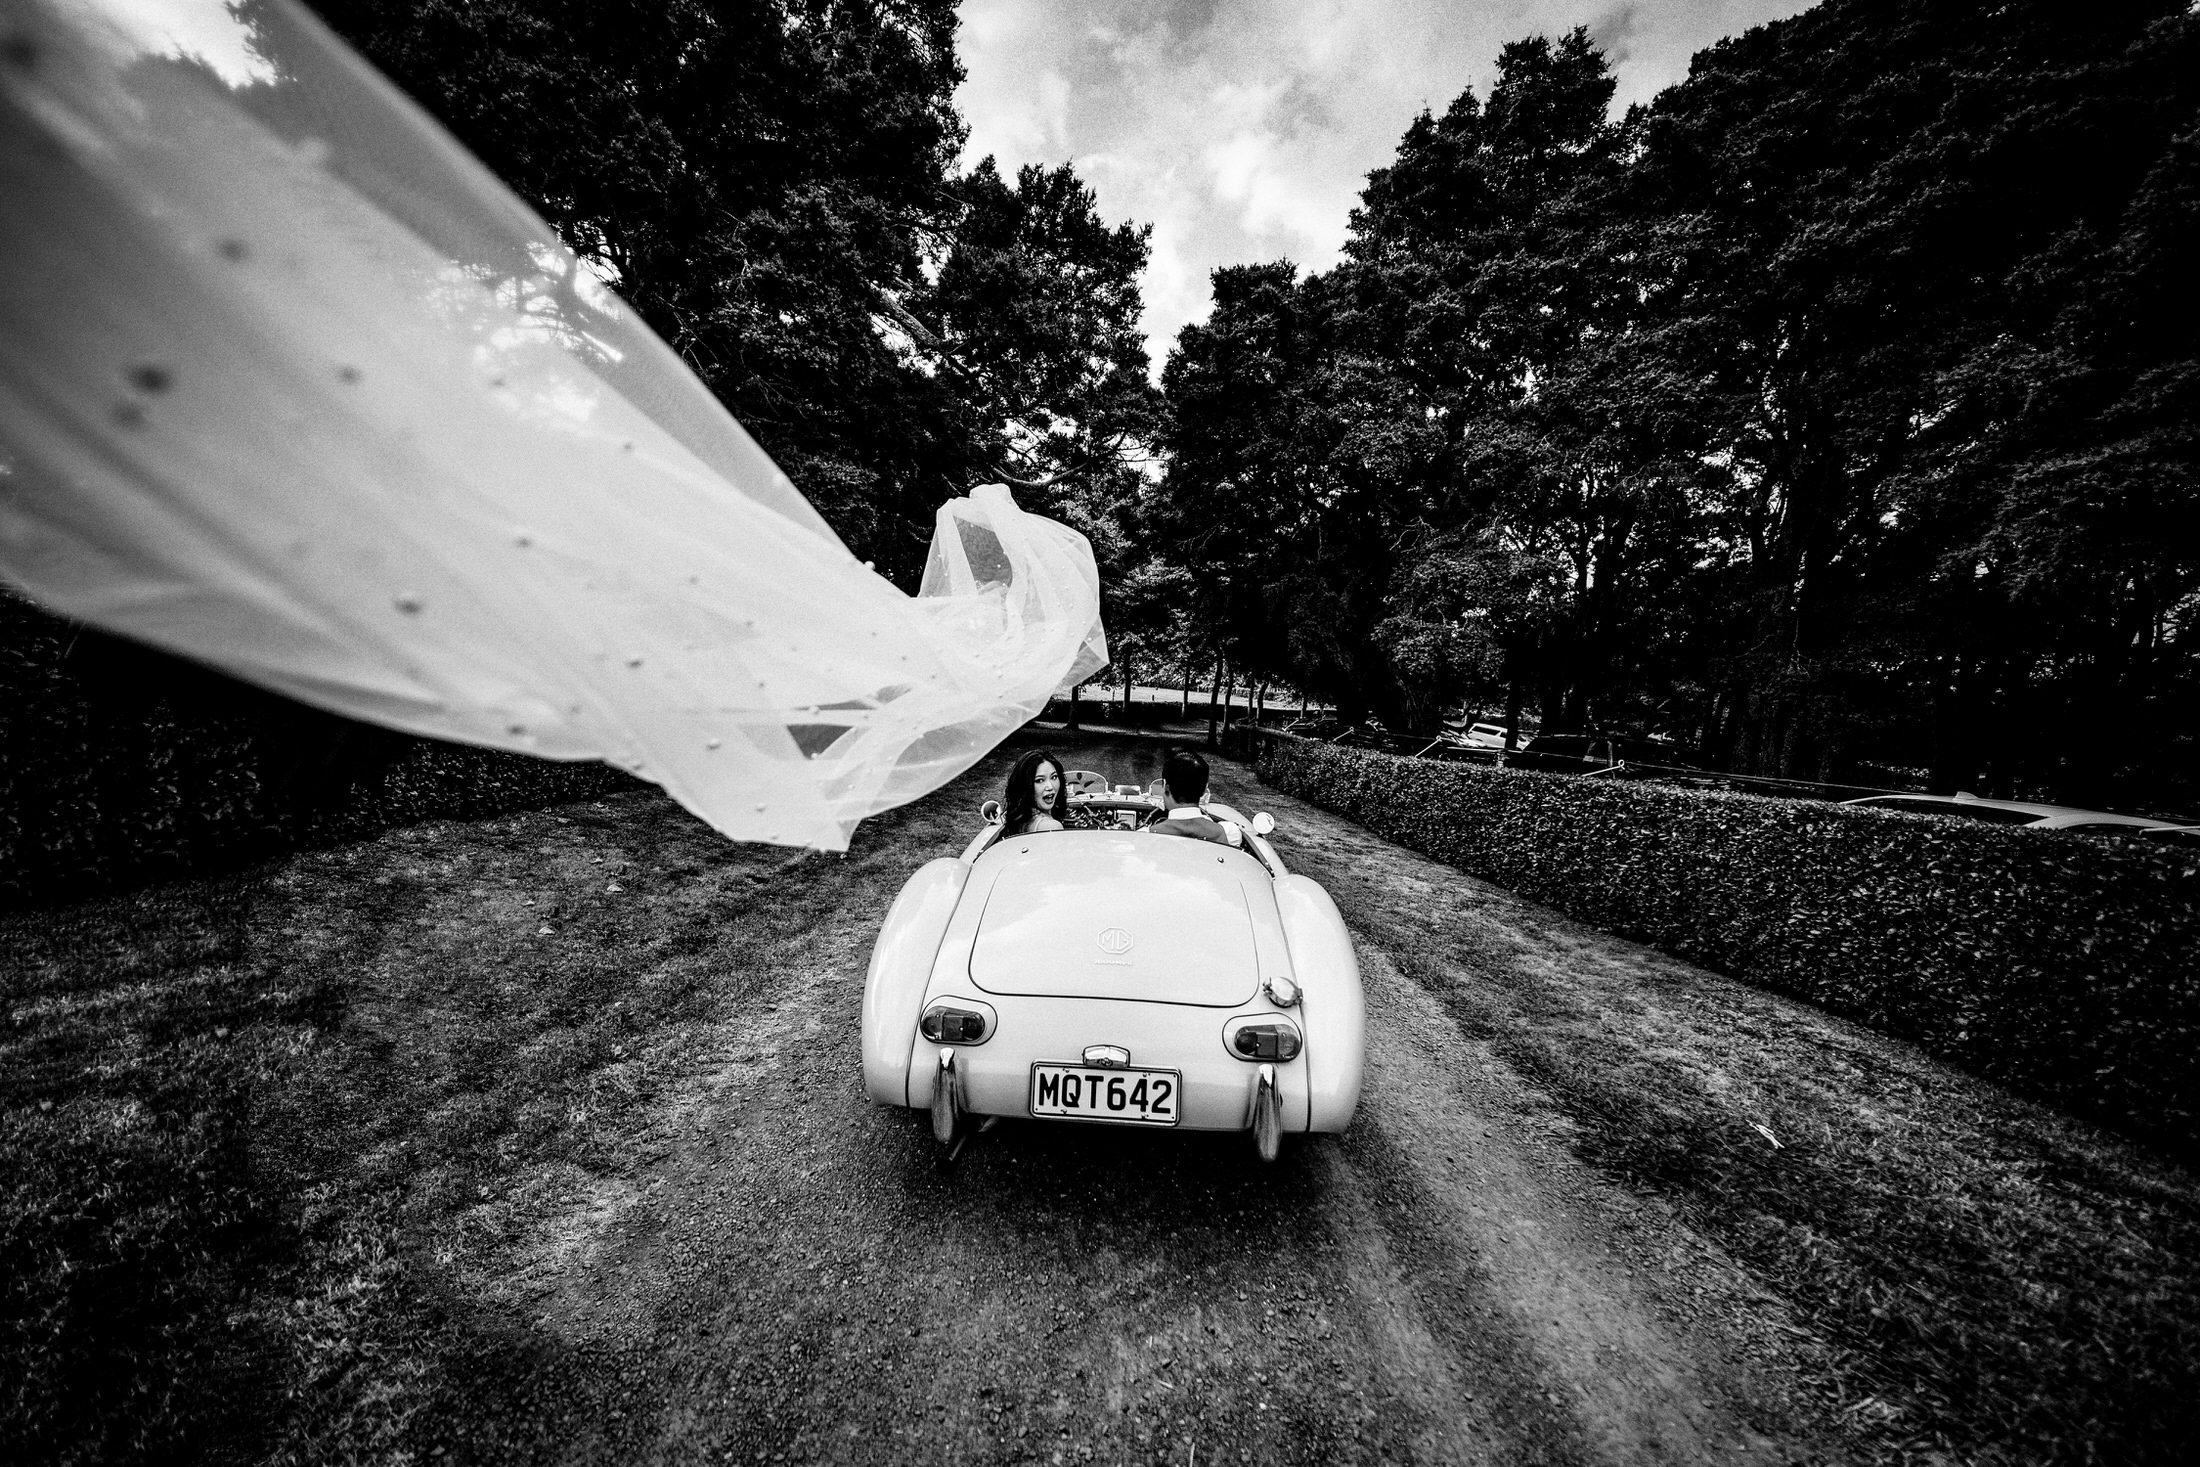 Auckland Wedding Photography &amp; Videography | Luxury Wedding Venue | Forest Wedding | South Auckland Wedding Venue | DIY Wedding | Hedges Estate Wedding | Vintage Car Wedding